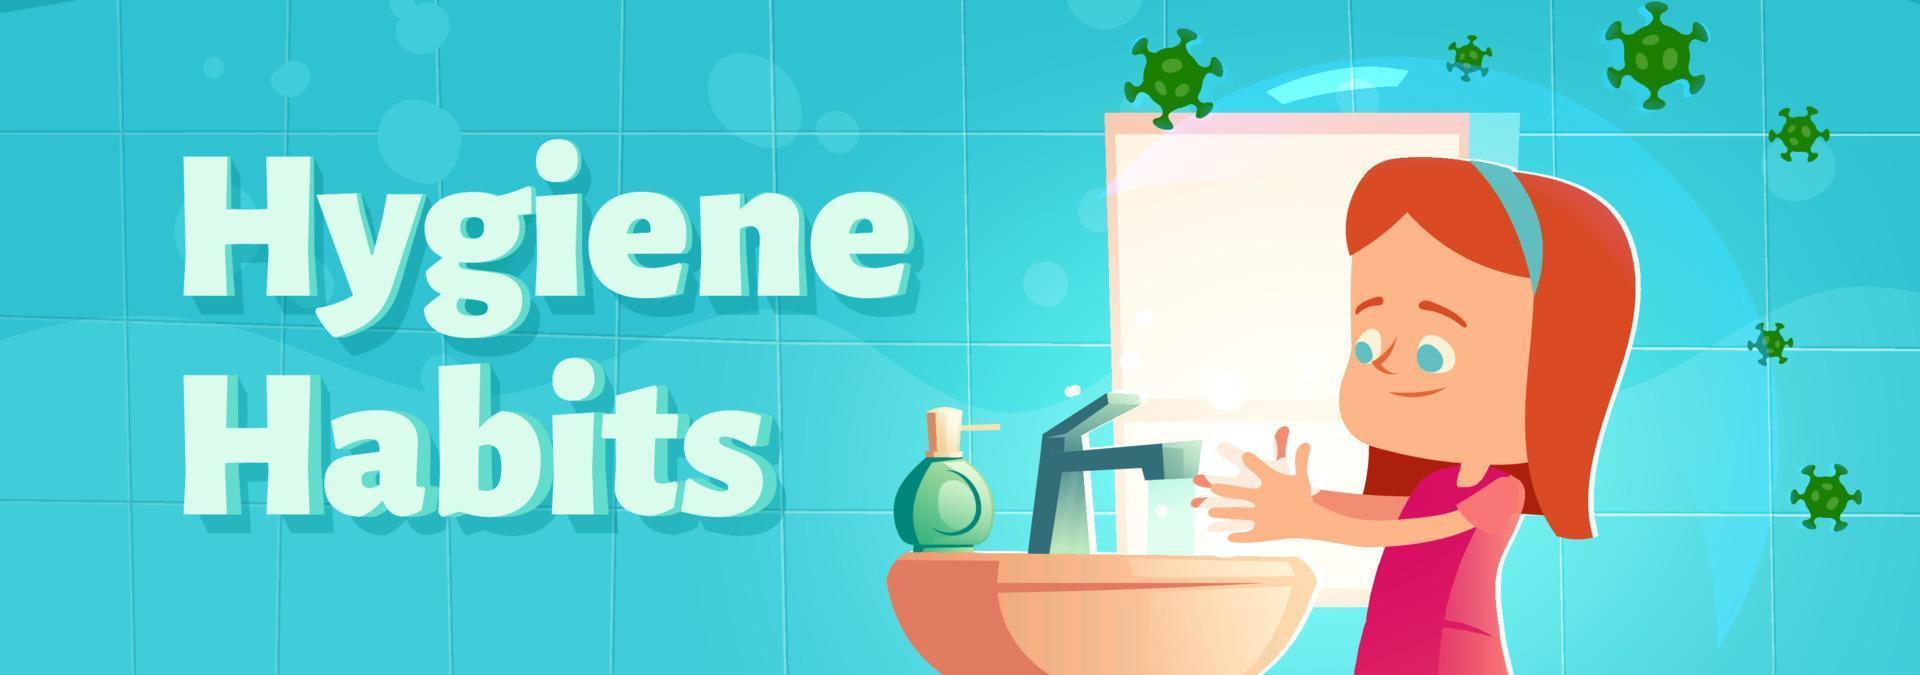 banner de dibujos animados de hábitos de higiene, niña lavándose las manos vector